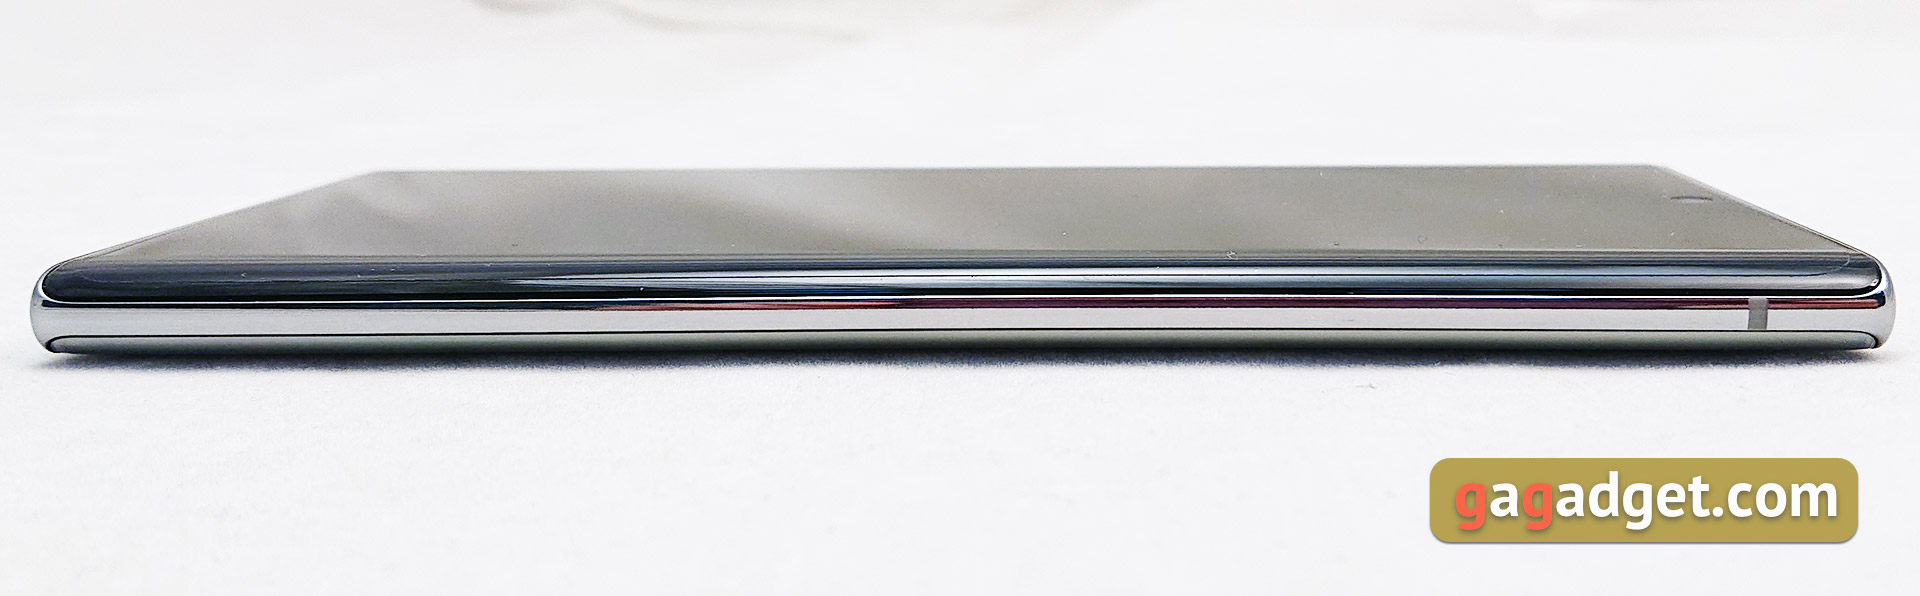 Огляд Samsung Galaxy Note10: той самий флагман, але дещо менший-9